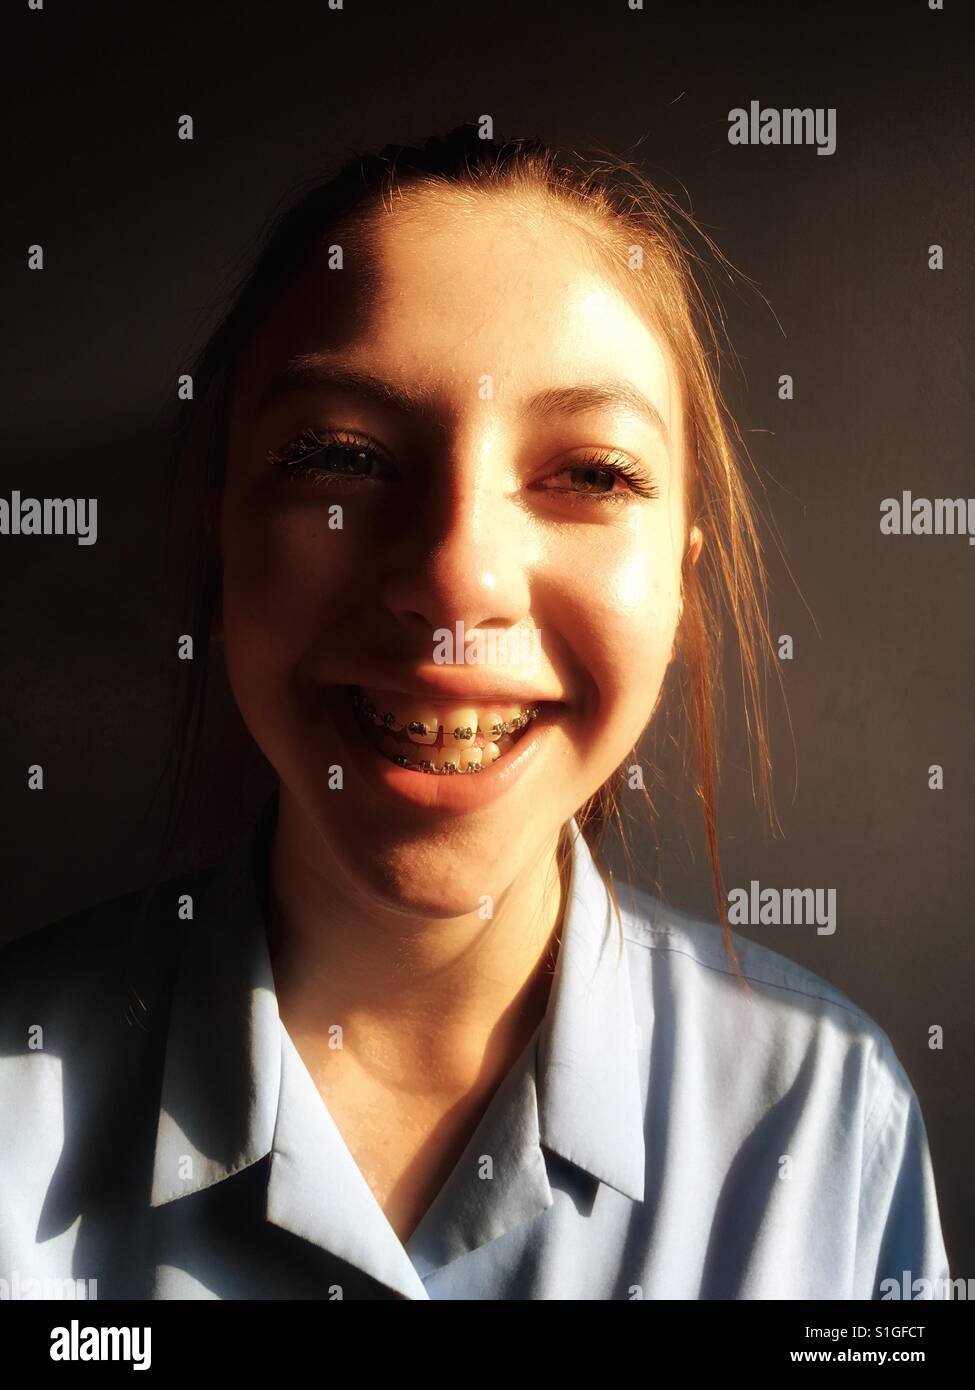 13-year old schoolgirl with brace on teeth Stock Photo